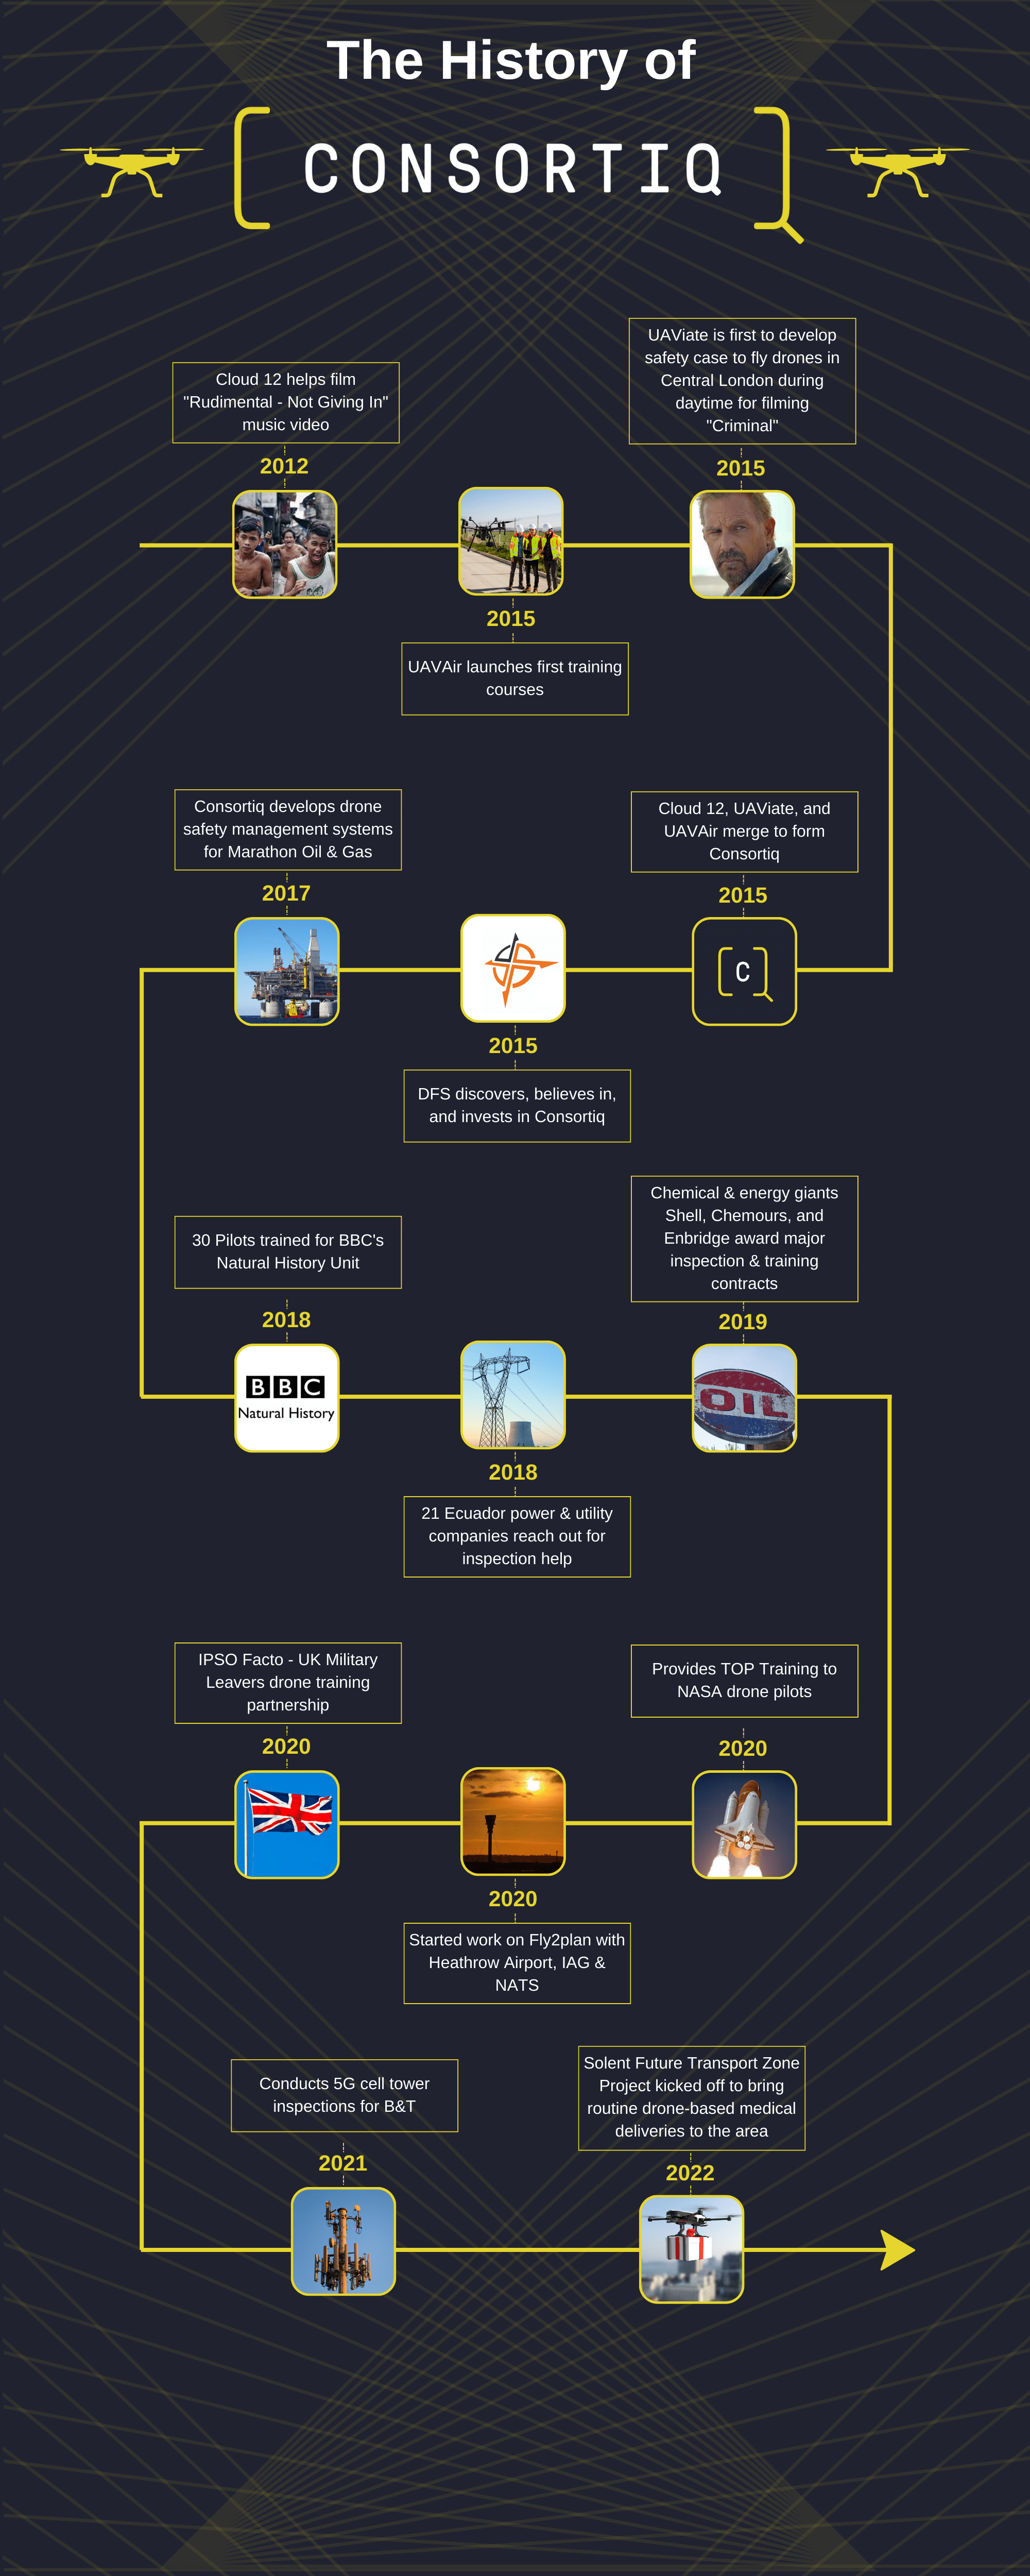 History Timeline of Consortiq's Accomplishments